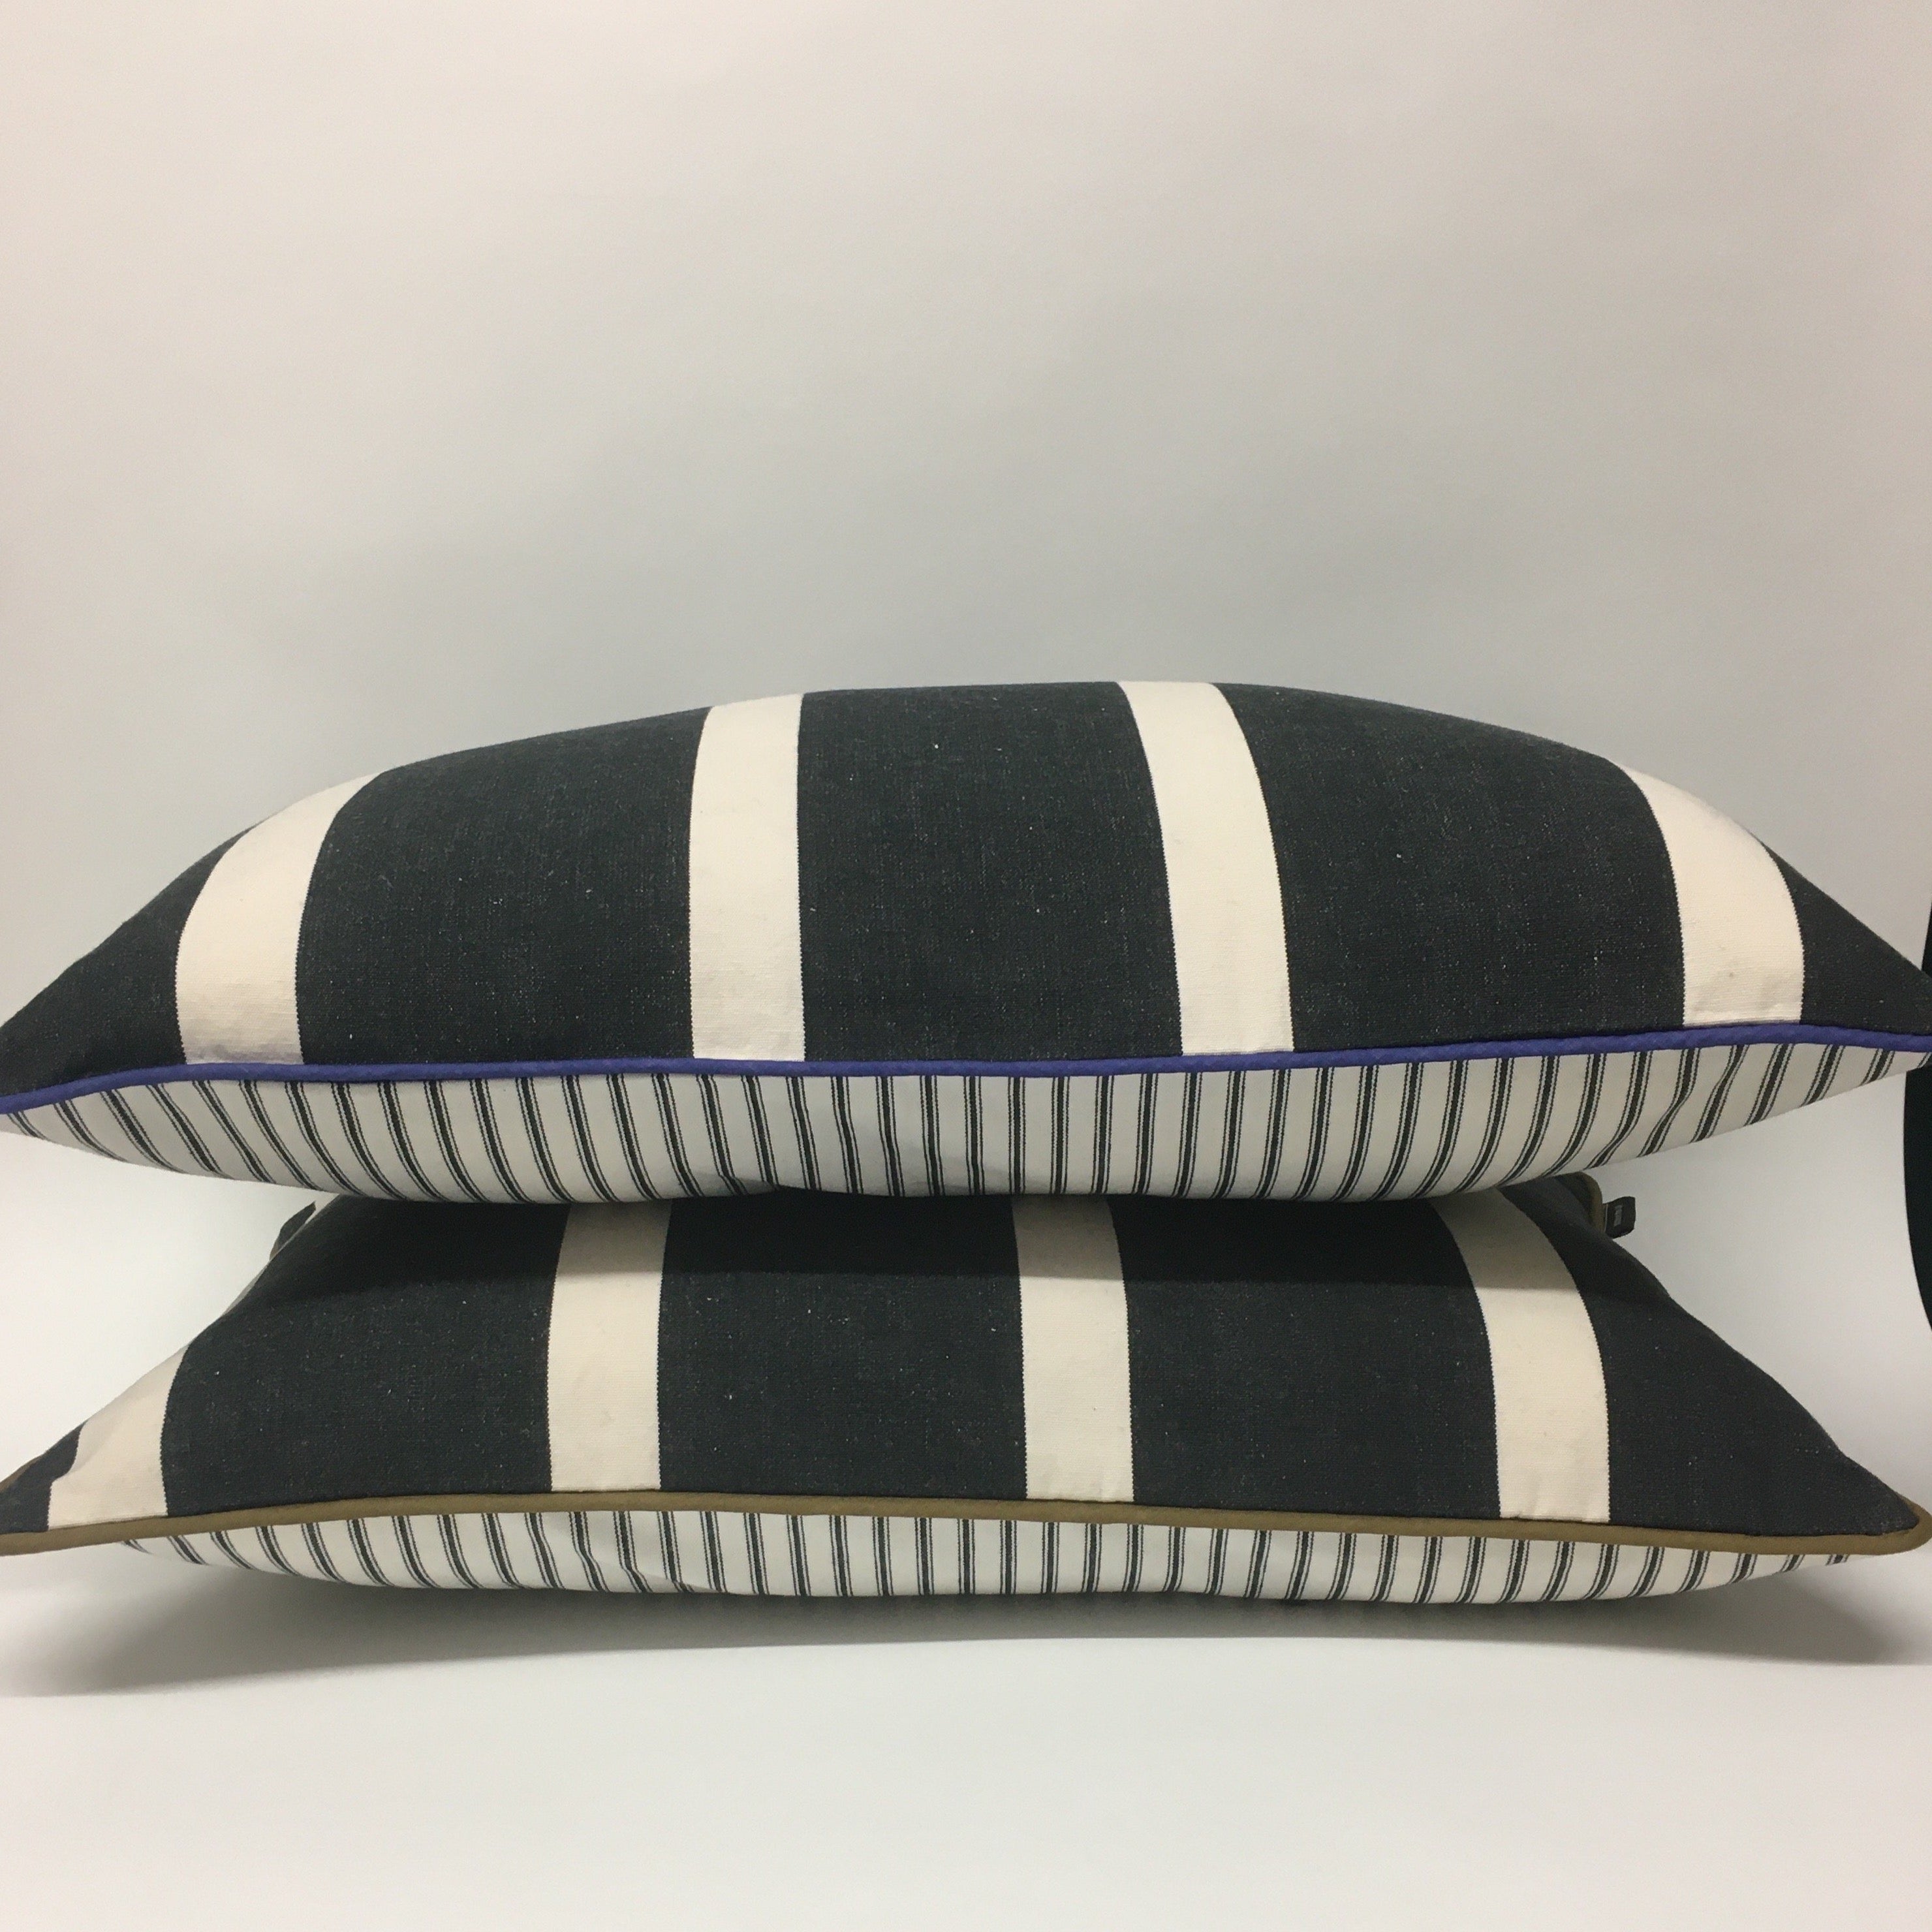 Black + White Striped Cushions